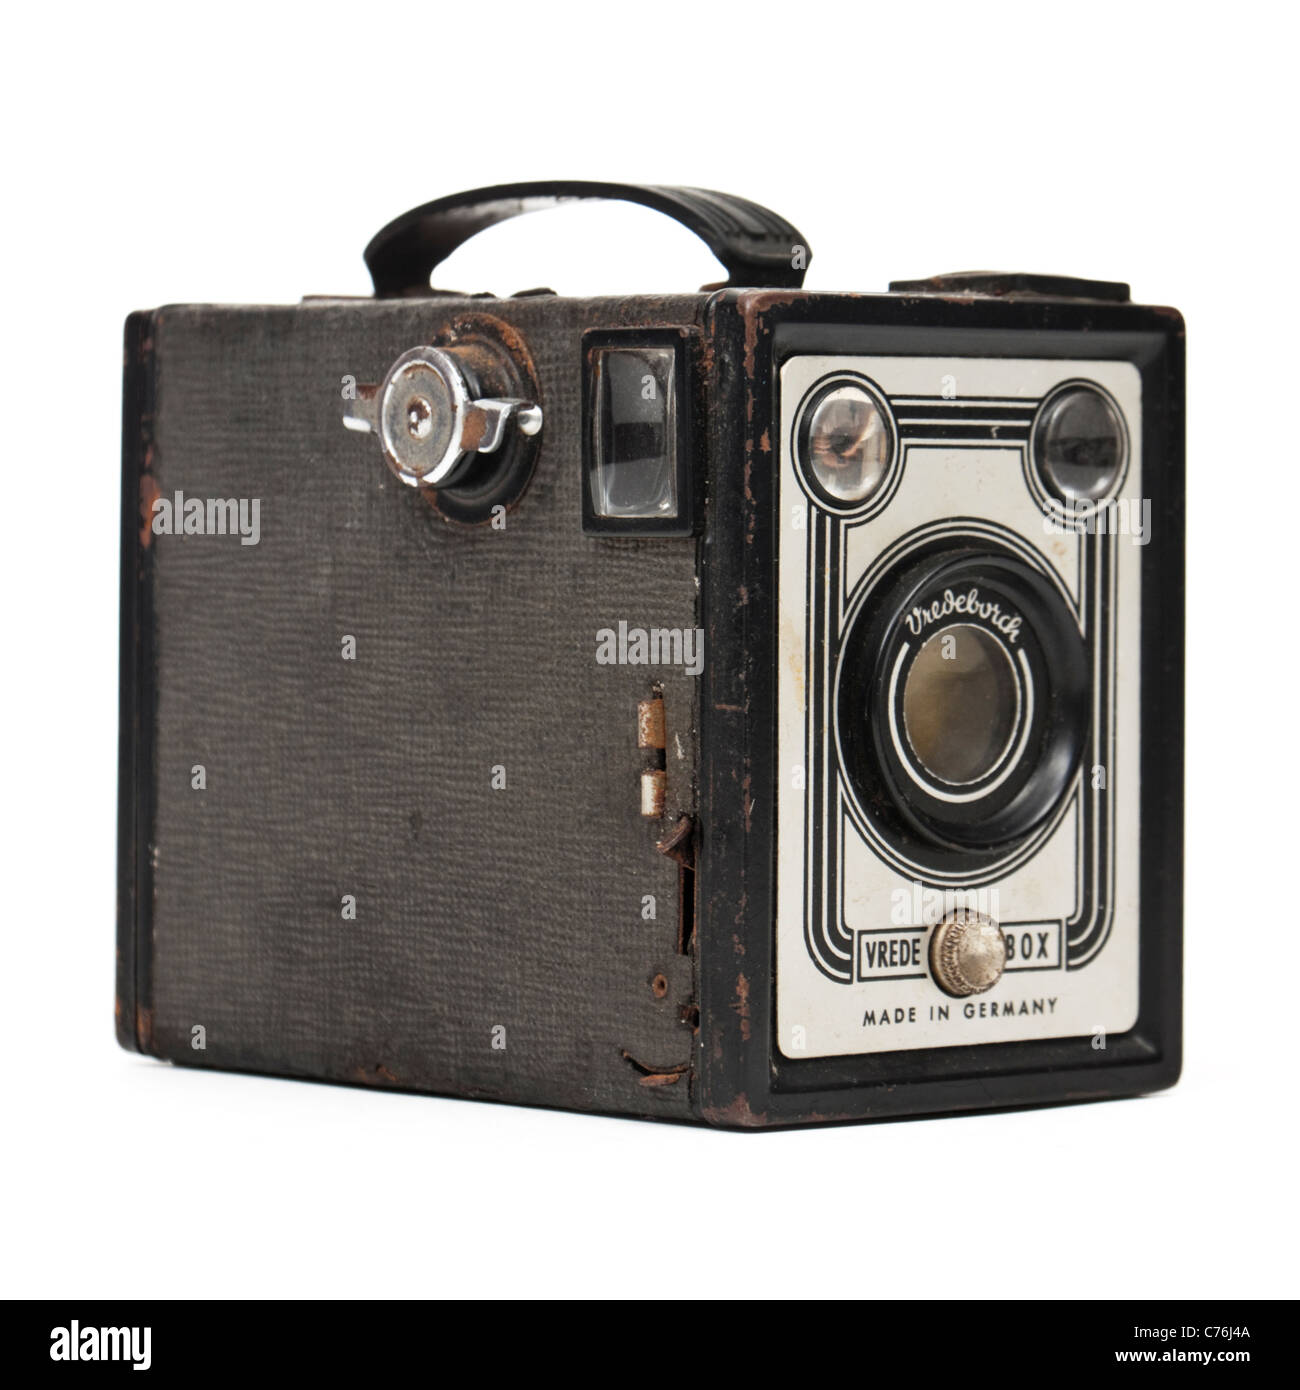 1940's Vrede Box camera by Vredeborch of Nordenham, Germany Stock Photo